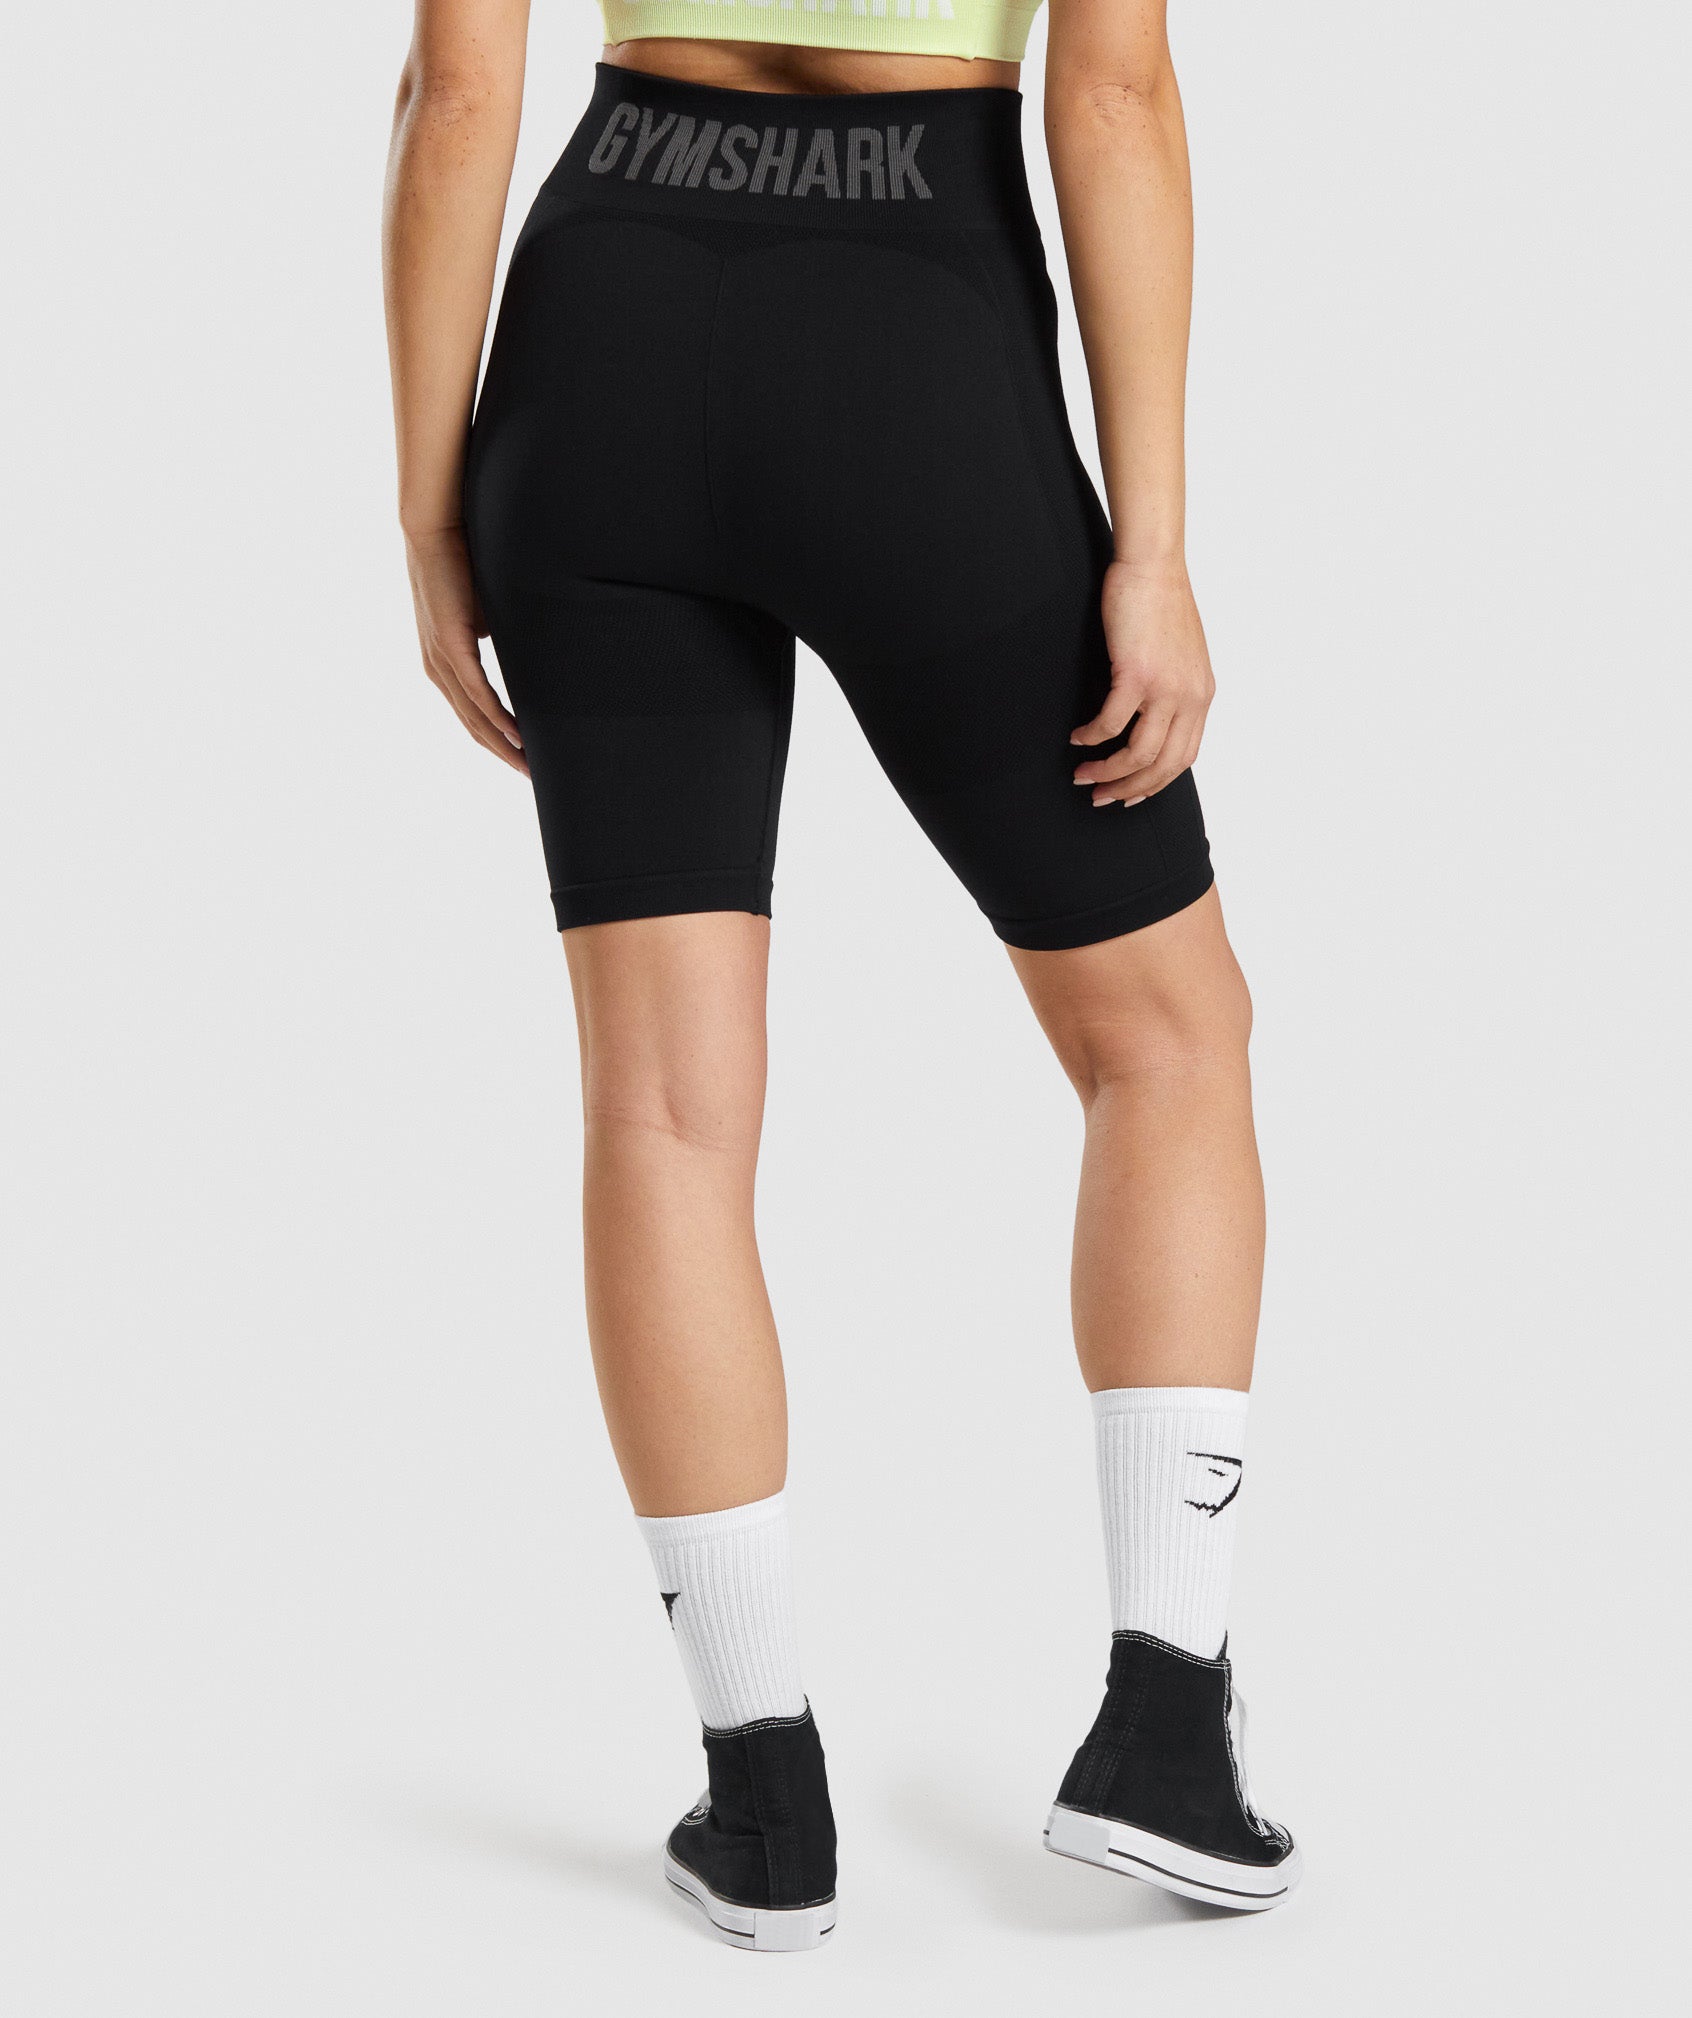 😜 simple hack with my shorts #gymshark #gymsharkwomen #gymshorts, biker  shorts